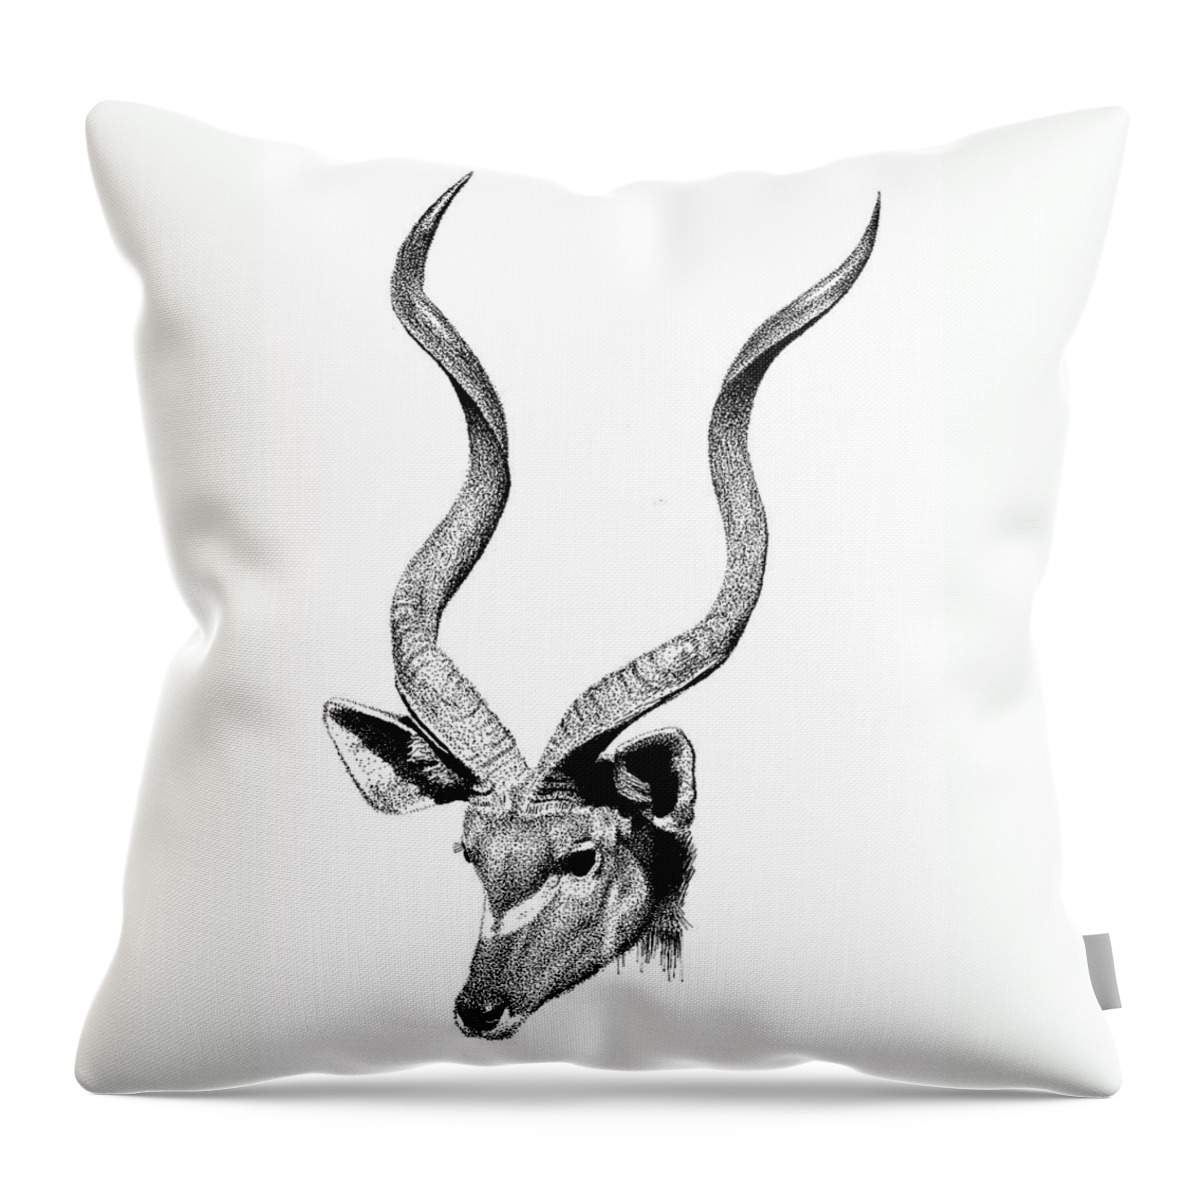 Kudu Throw Pillow featuring the drawing Kudu by Scott Woyak